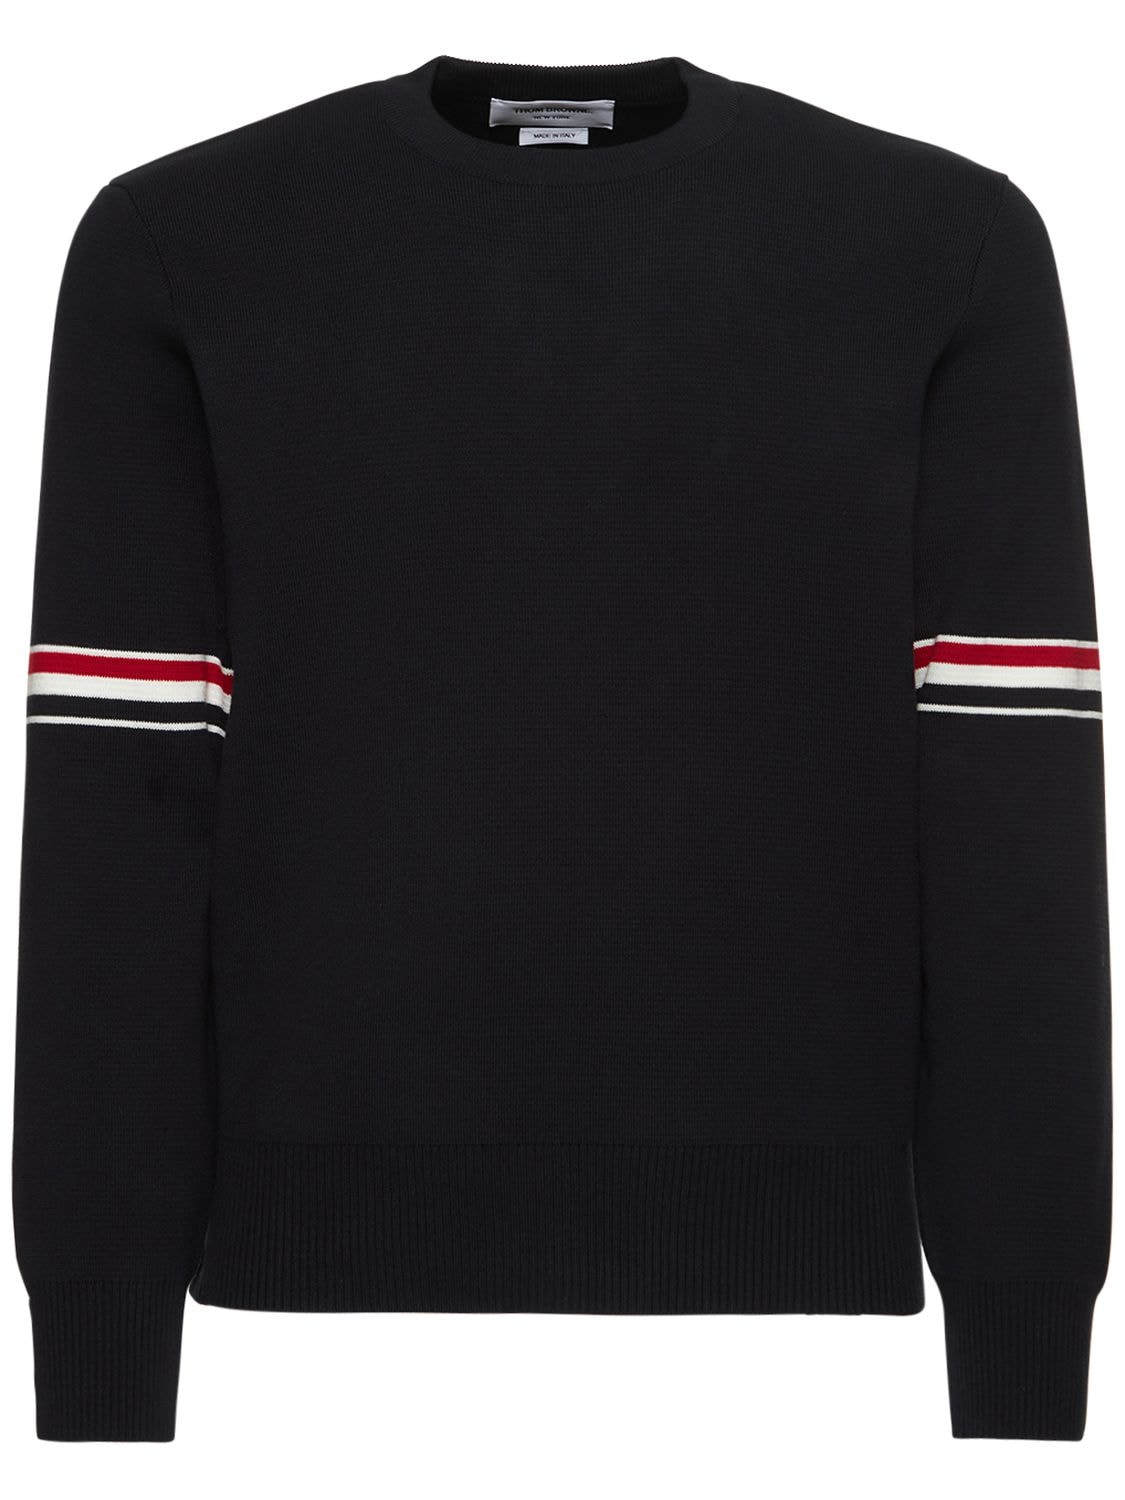 Image of Milano Stitch Crewneck Cotton Sweater